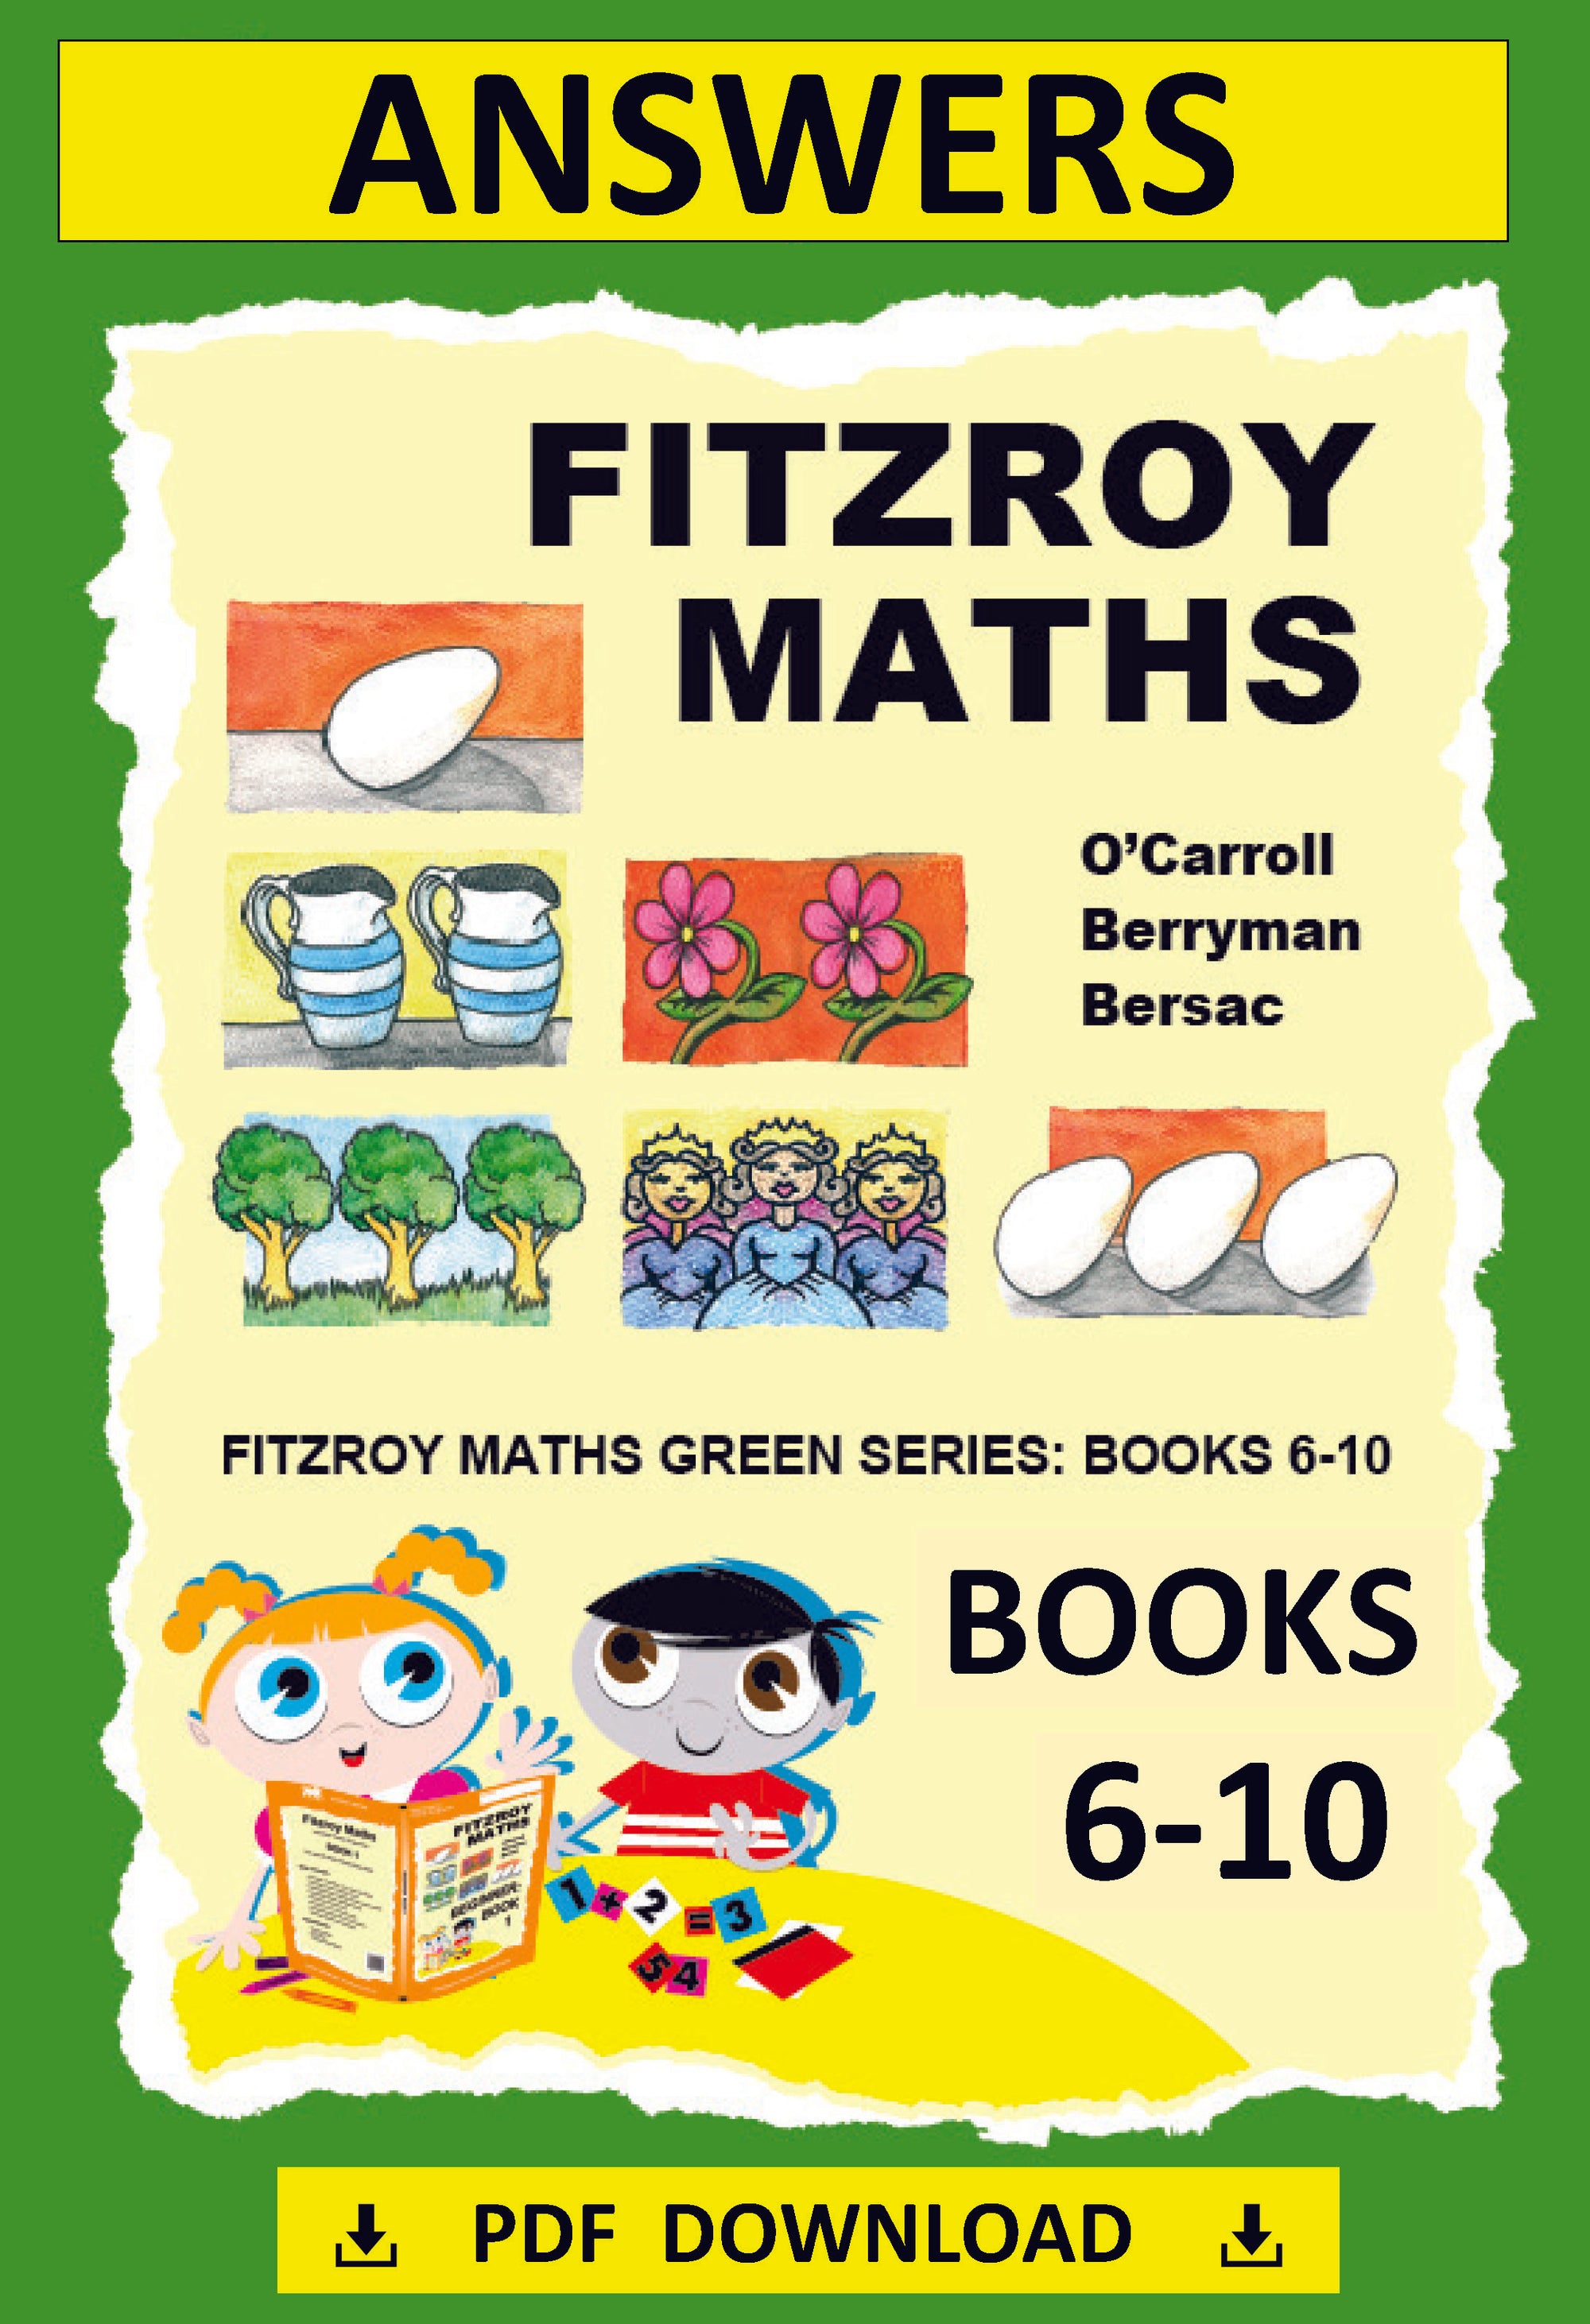 Fitzroy Maths Answers 6-10